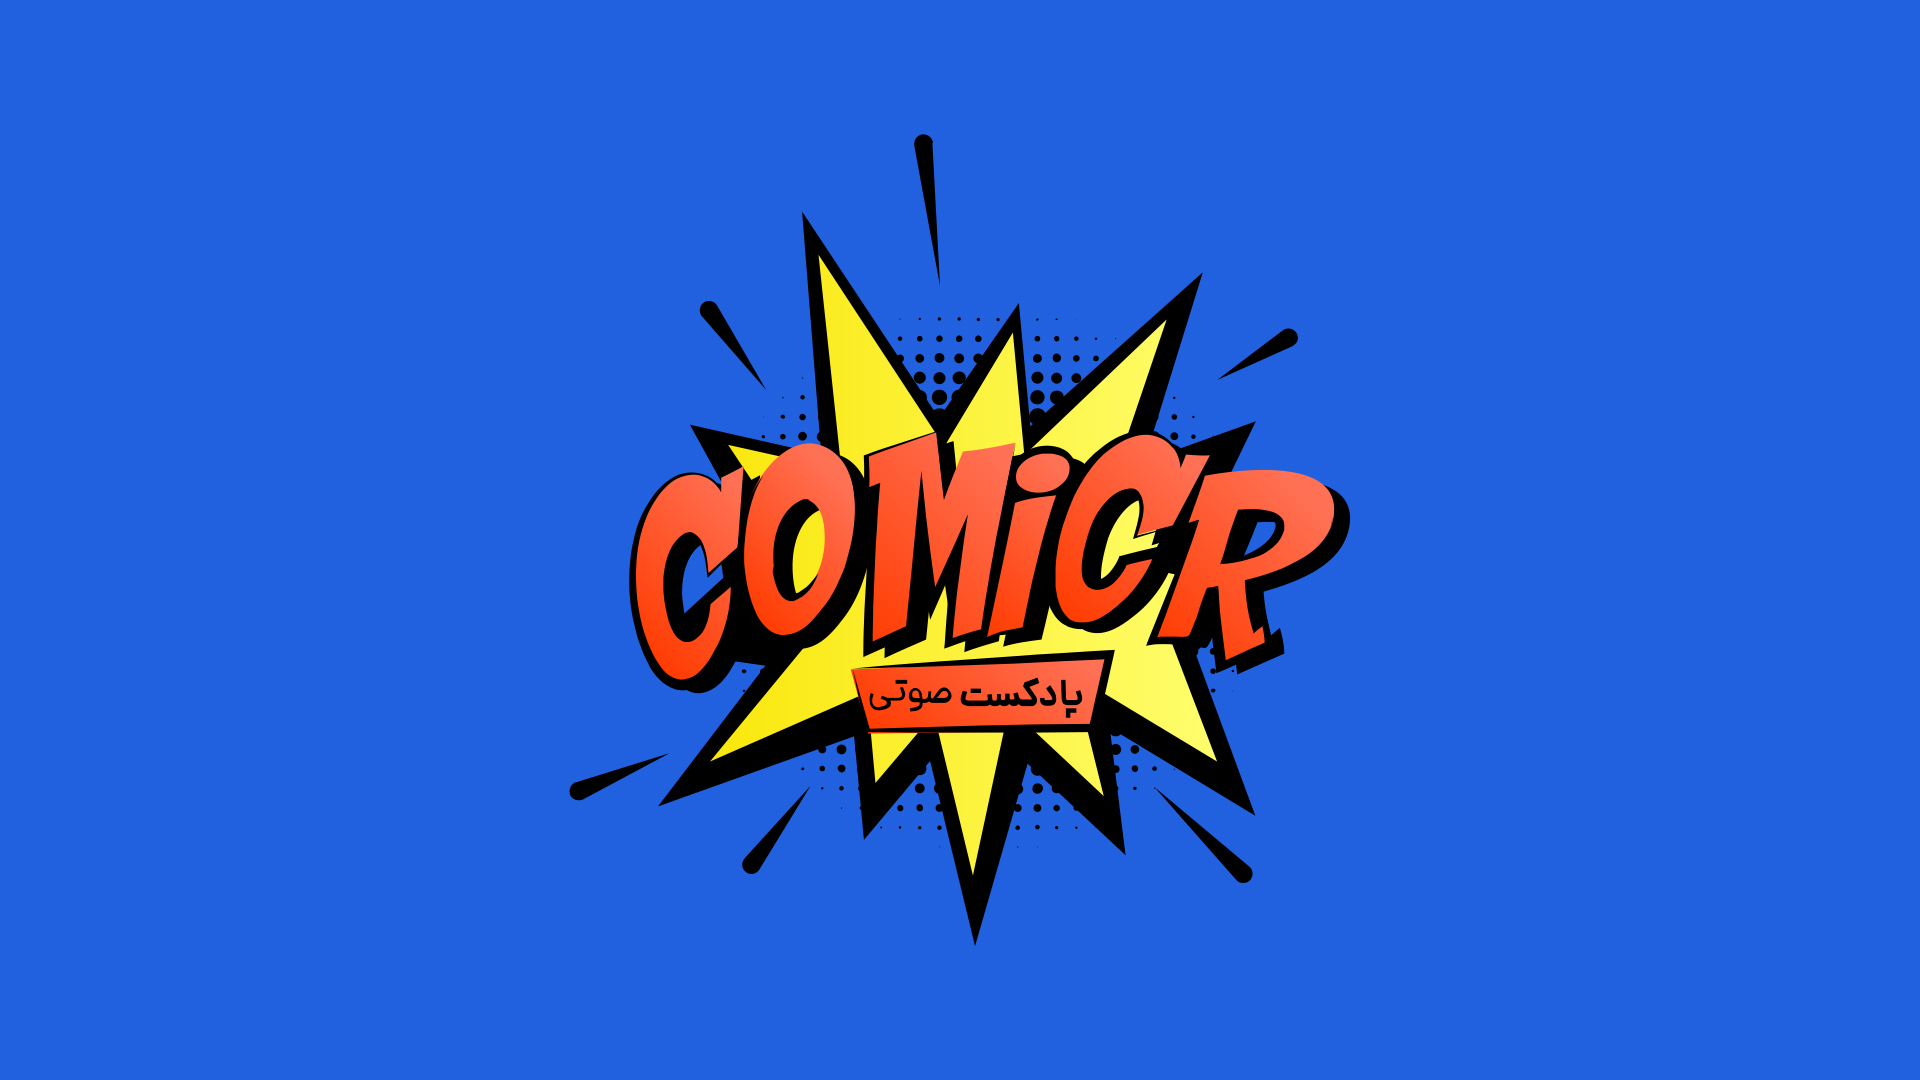 کمیکر - سرگرمی تی وی | ComicR - ME TV